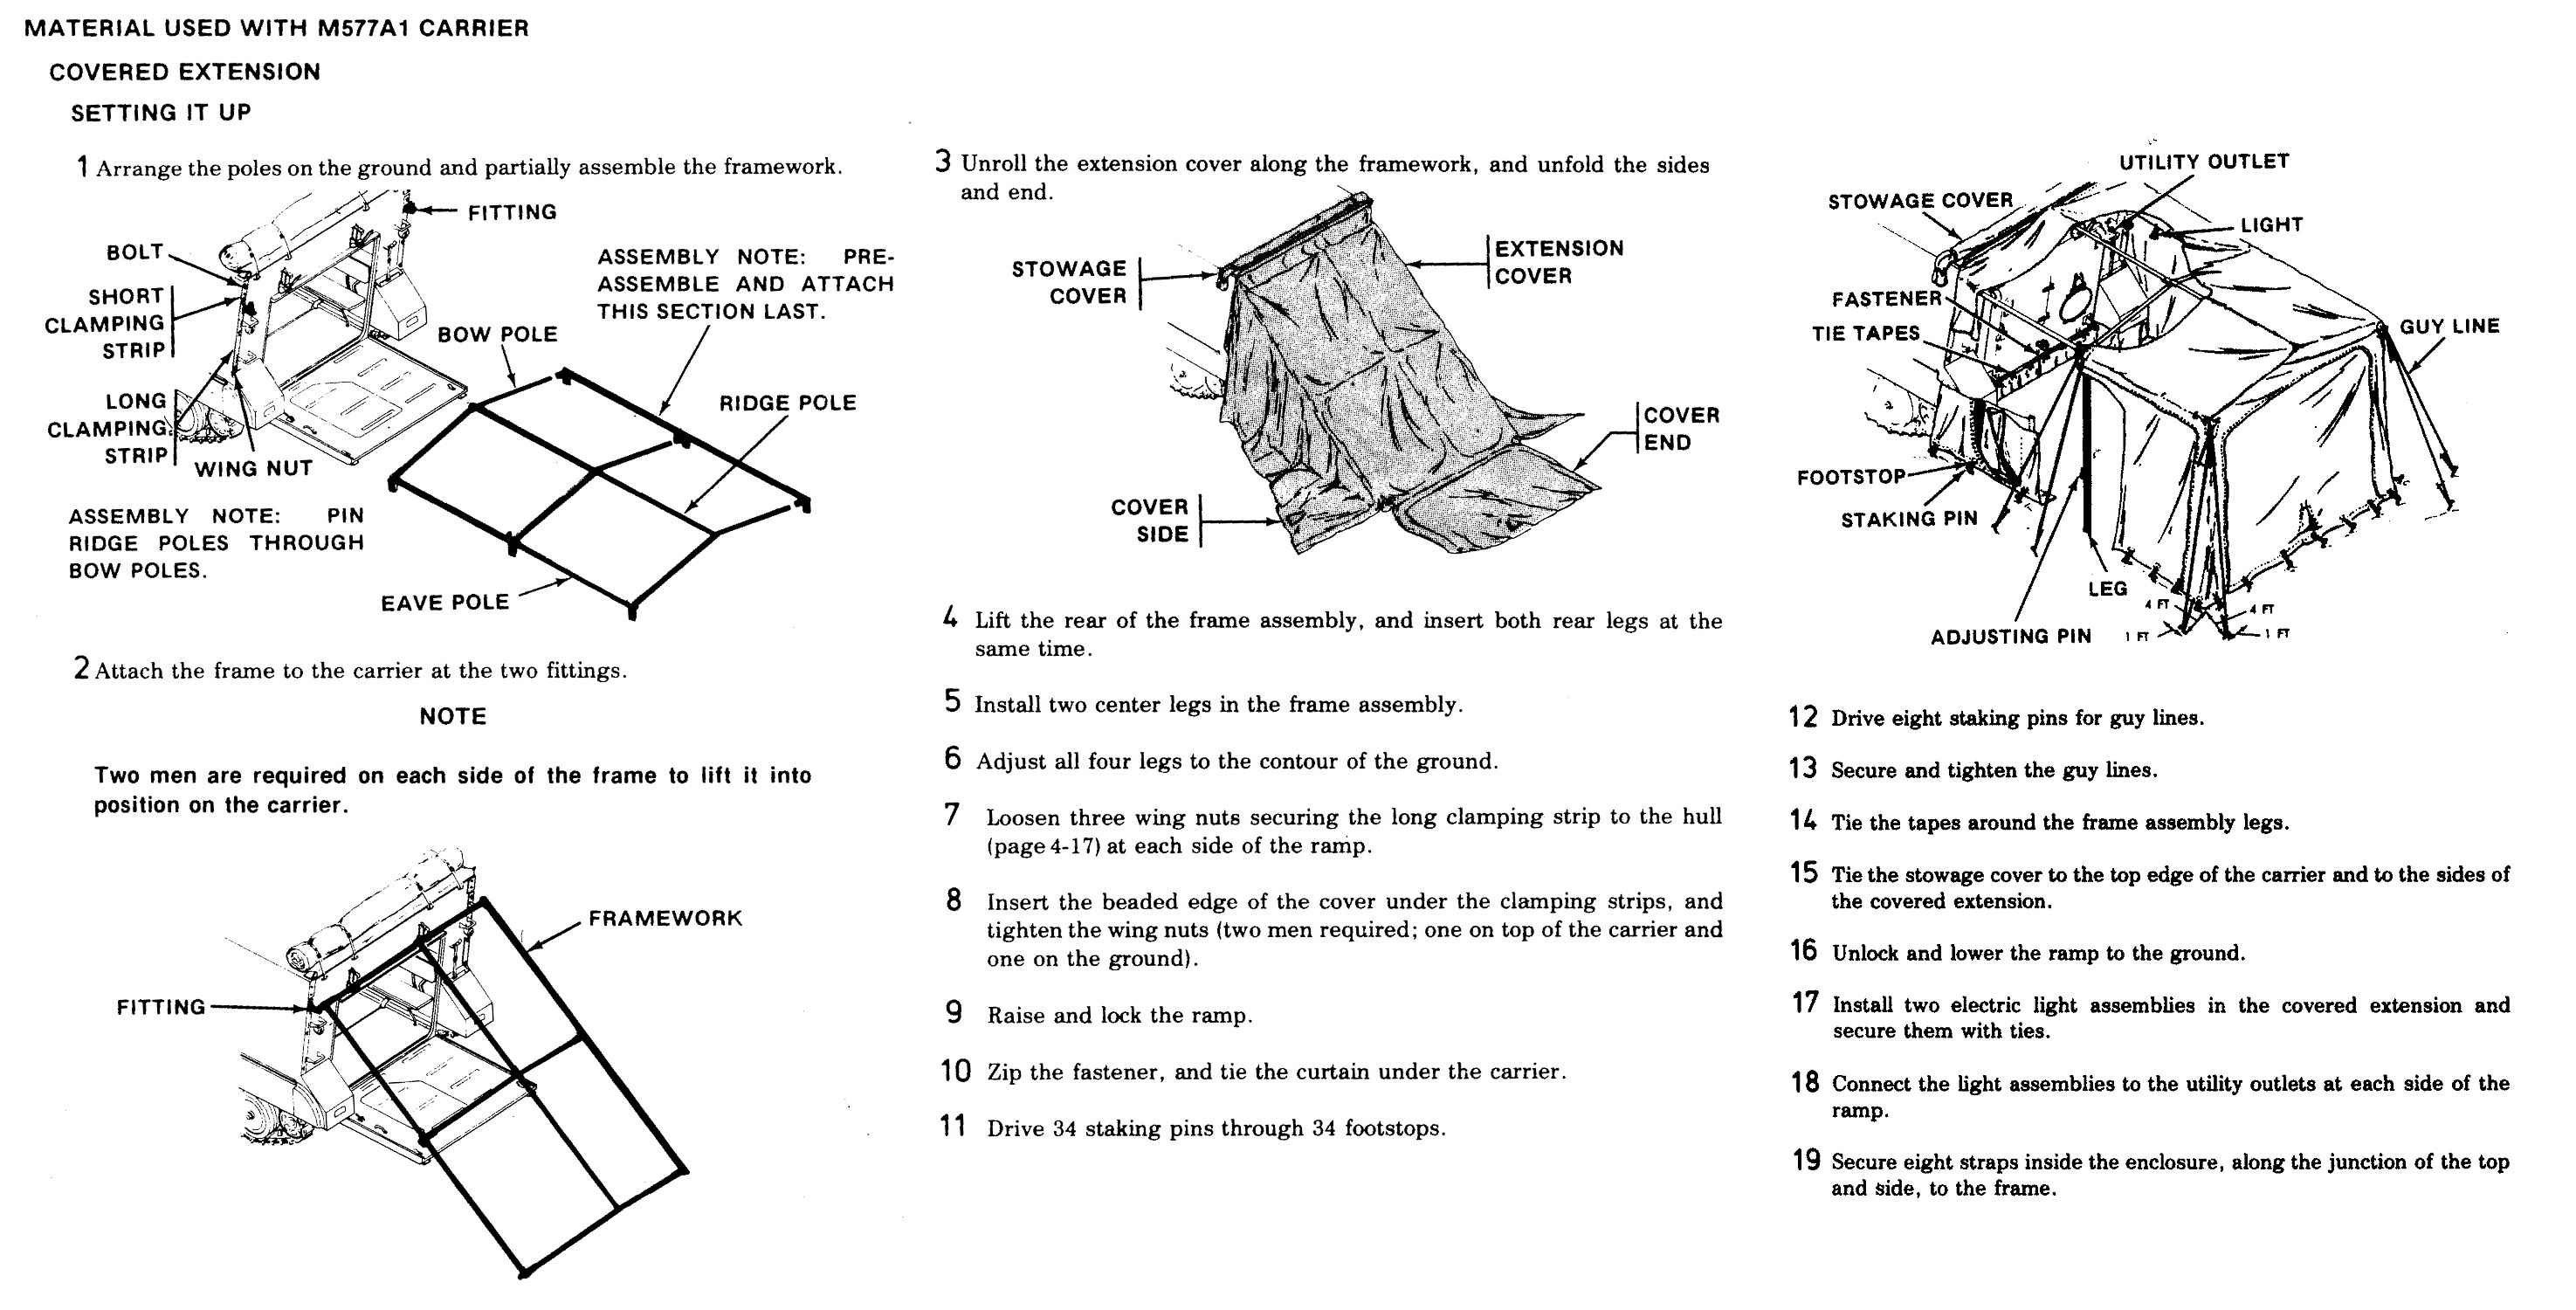 File:M577A1 Tent Instructions.jpg - Wikipedia